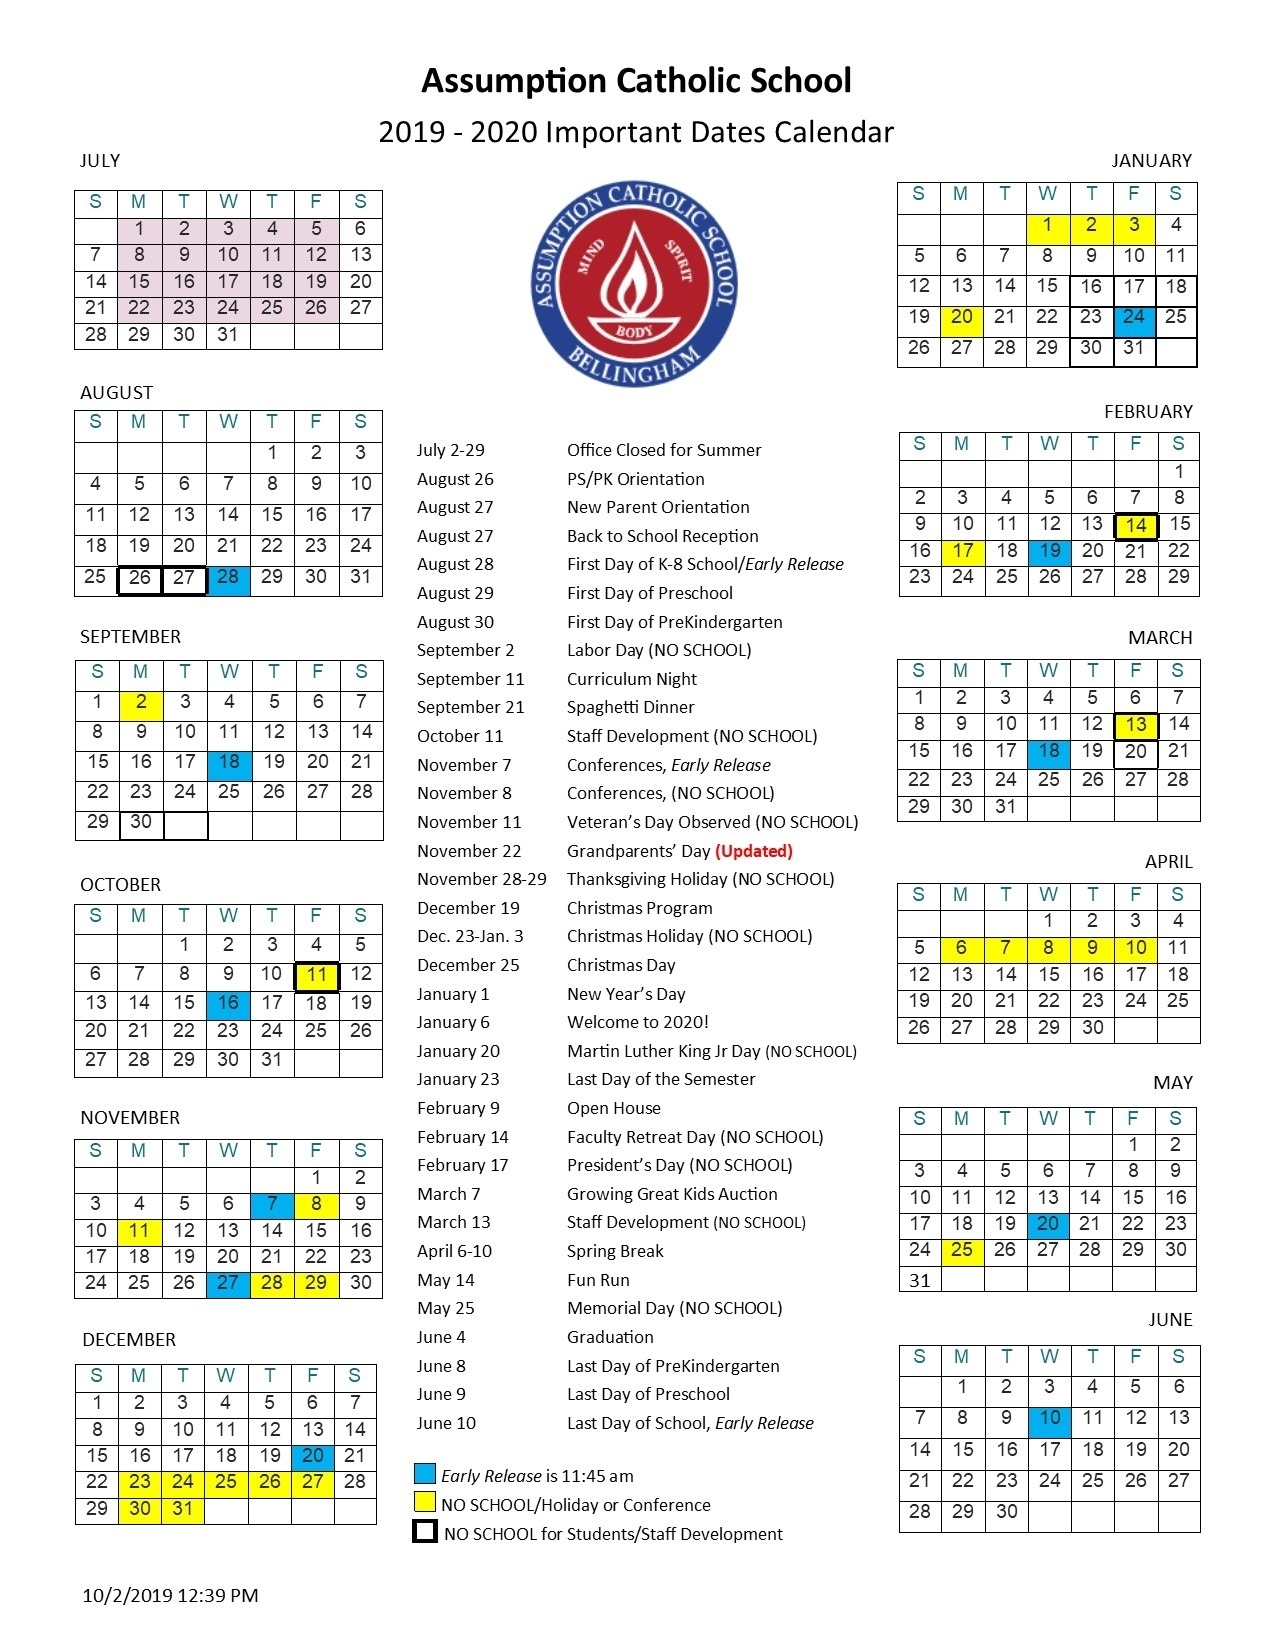 Important Dates Calendar 2019-2020 - Assumption Catholic School